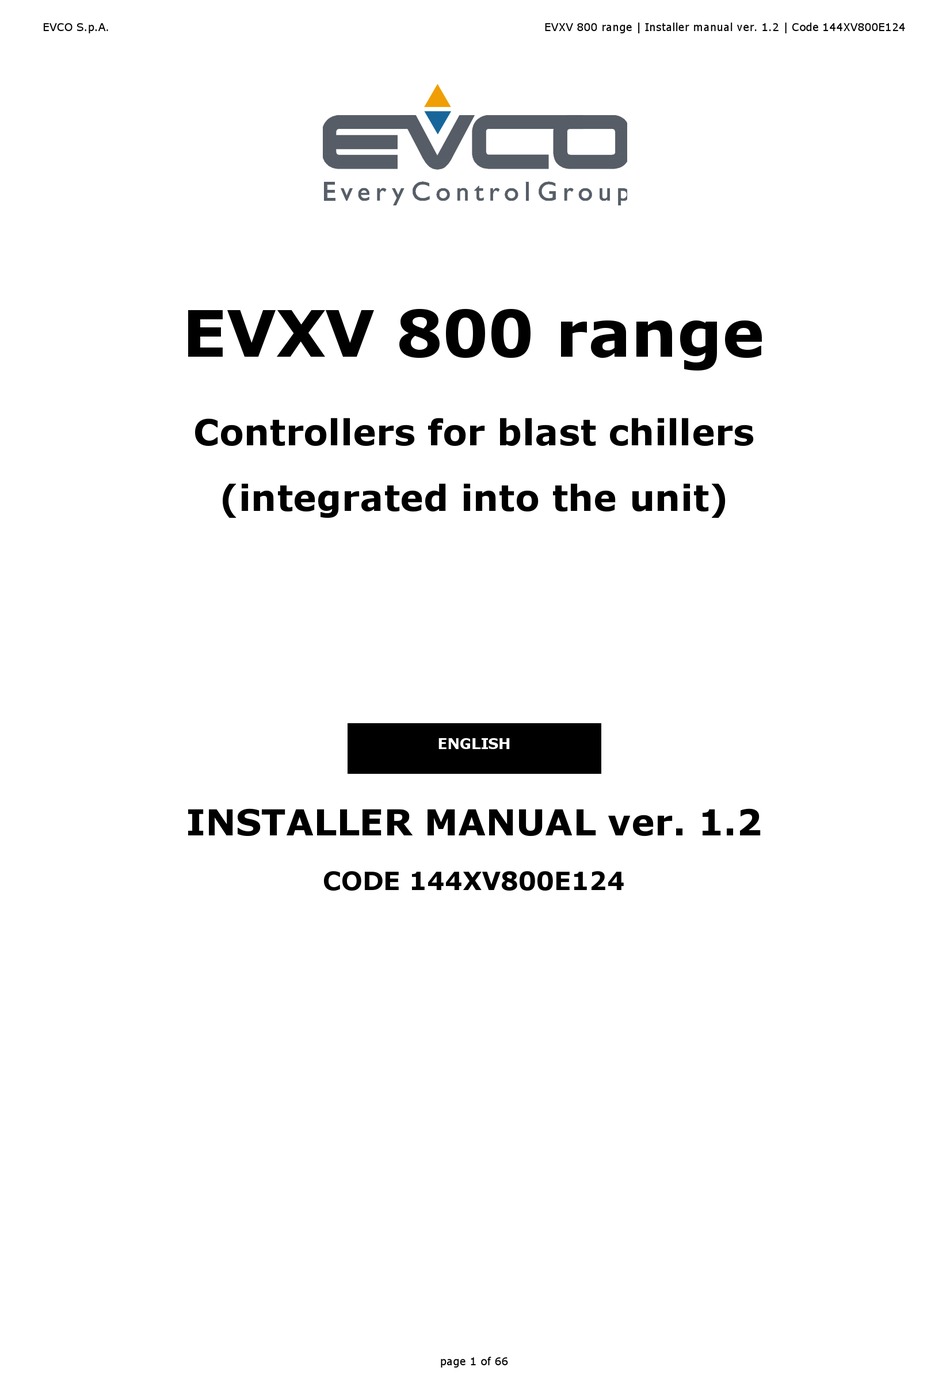 evco controls manual